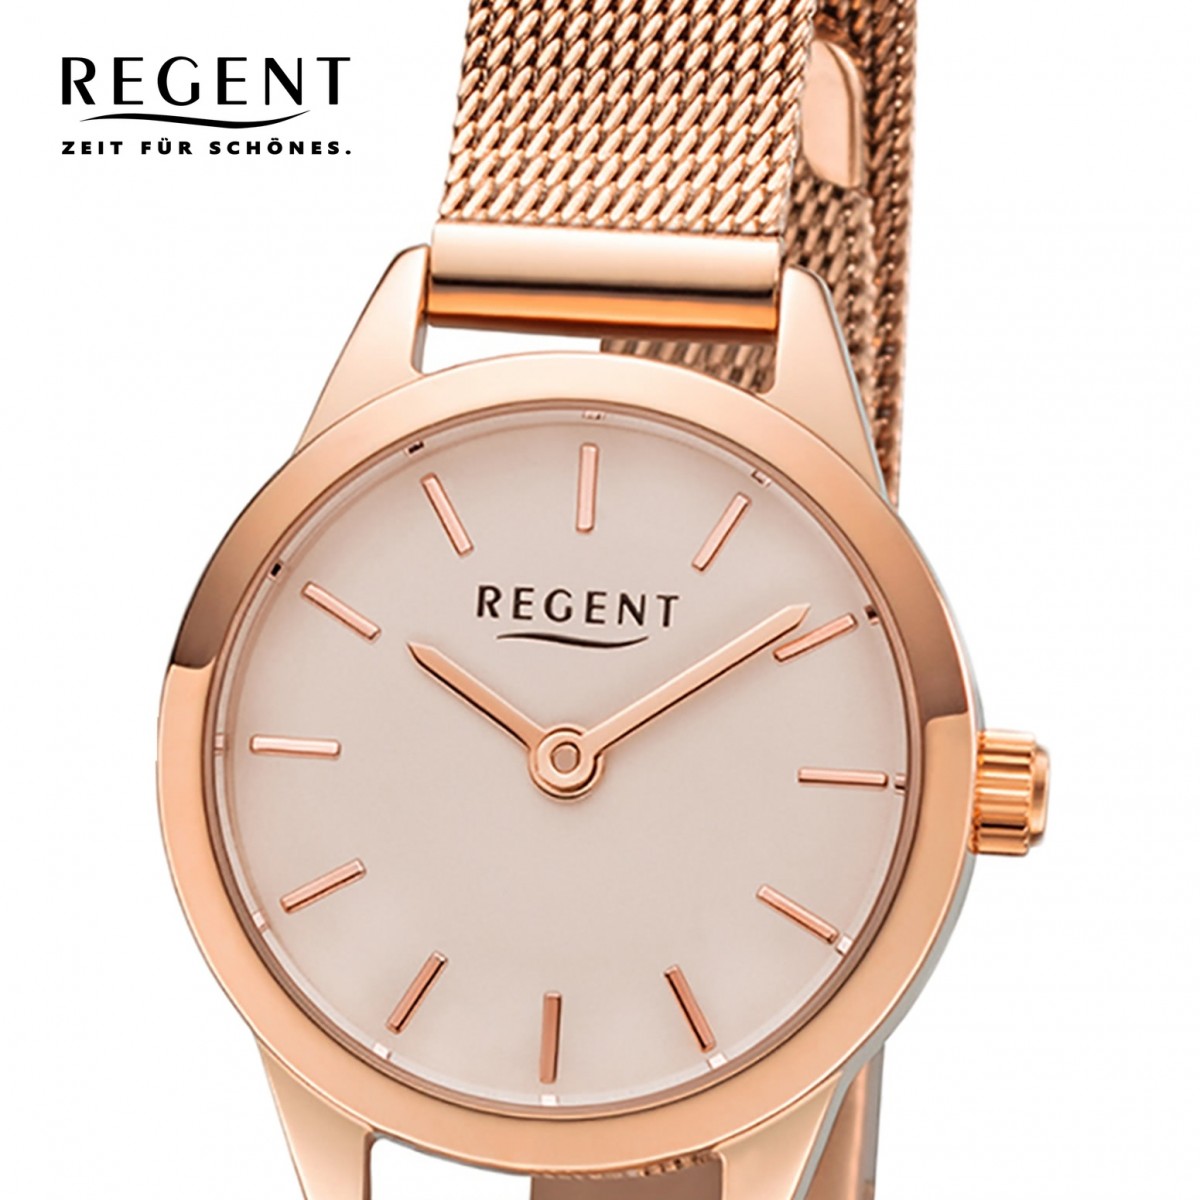 Regent Damen Analog Metall URF1167 rosegold Quarz-Uhr F-1167 Armbanduhr